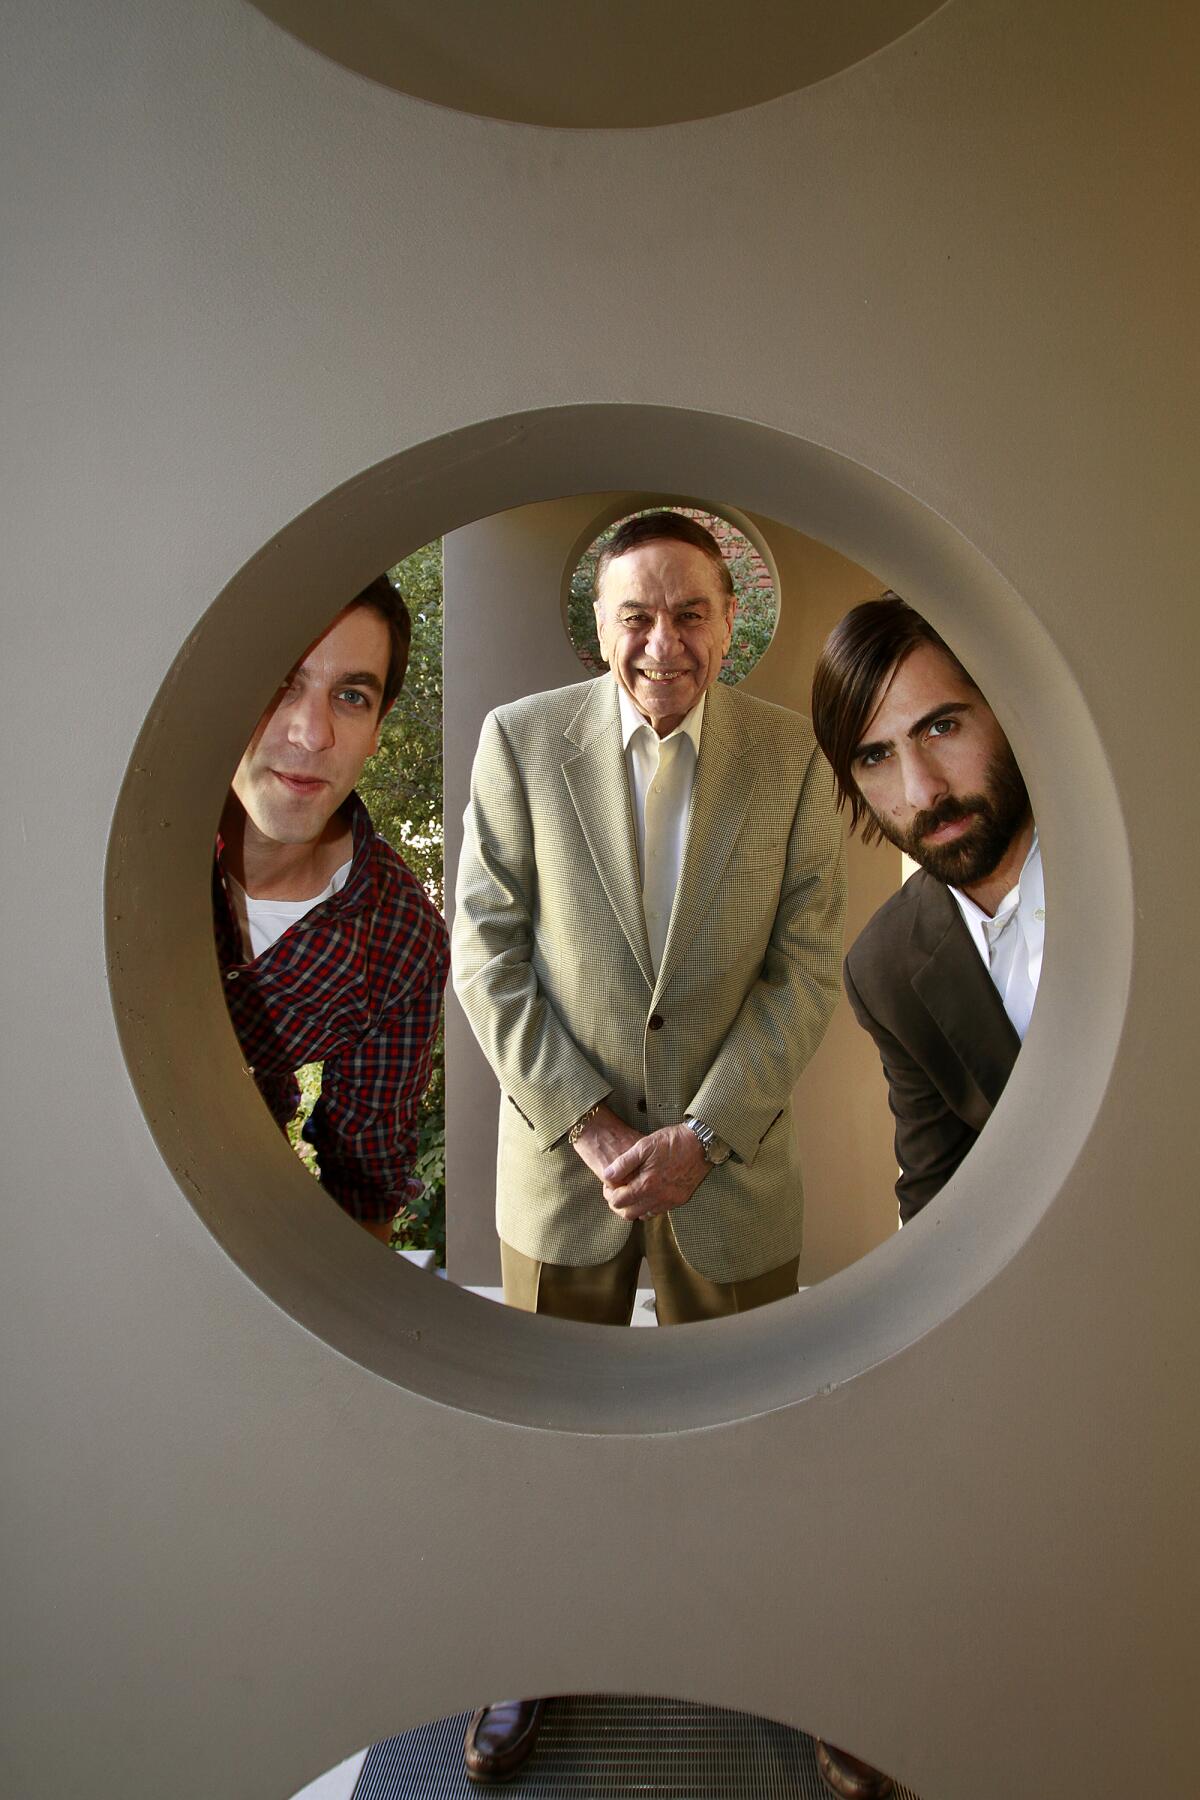 Three men peer through a circular opening in a wall